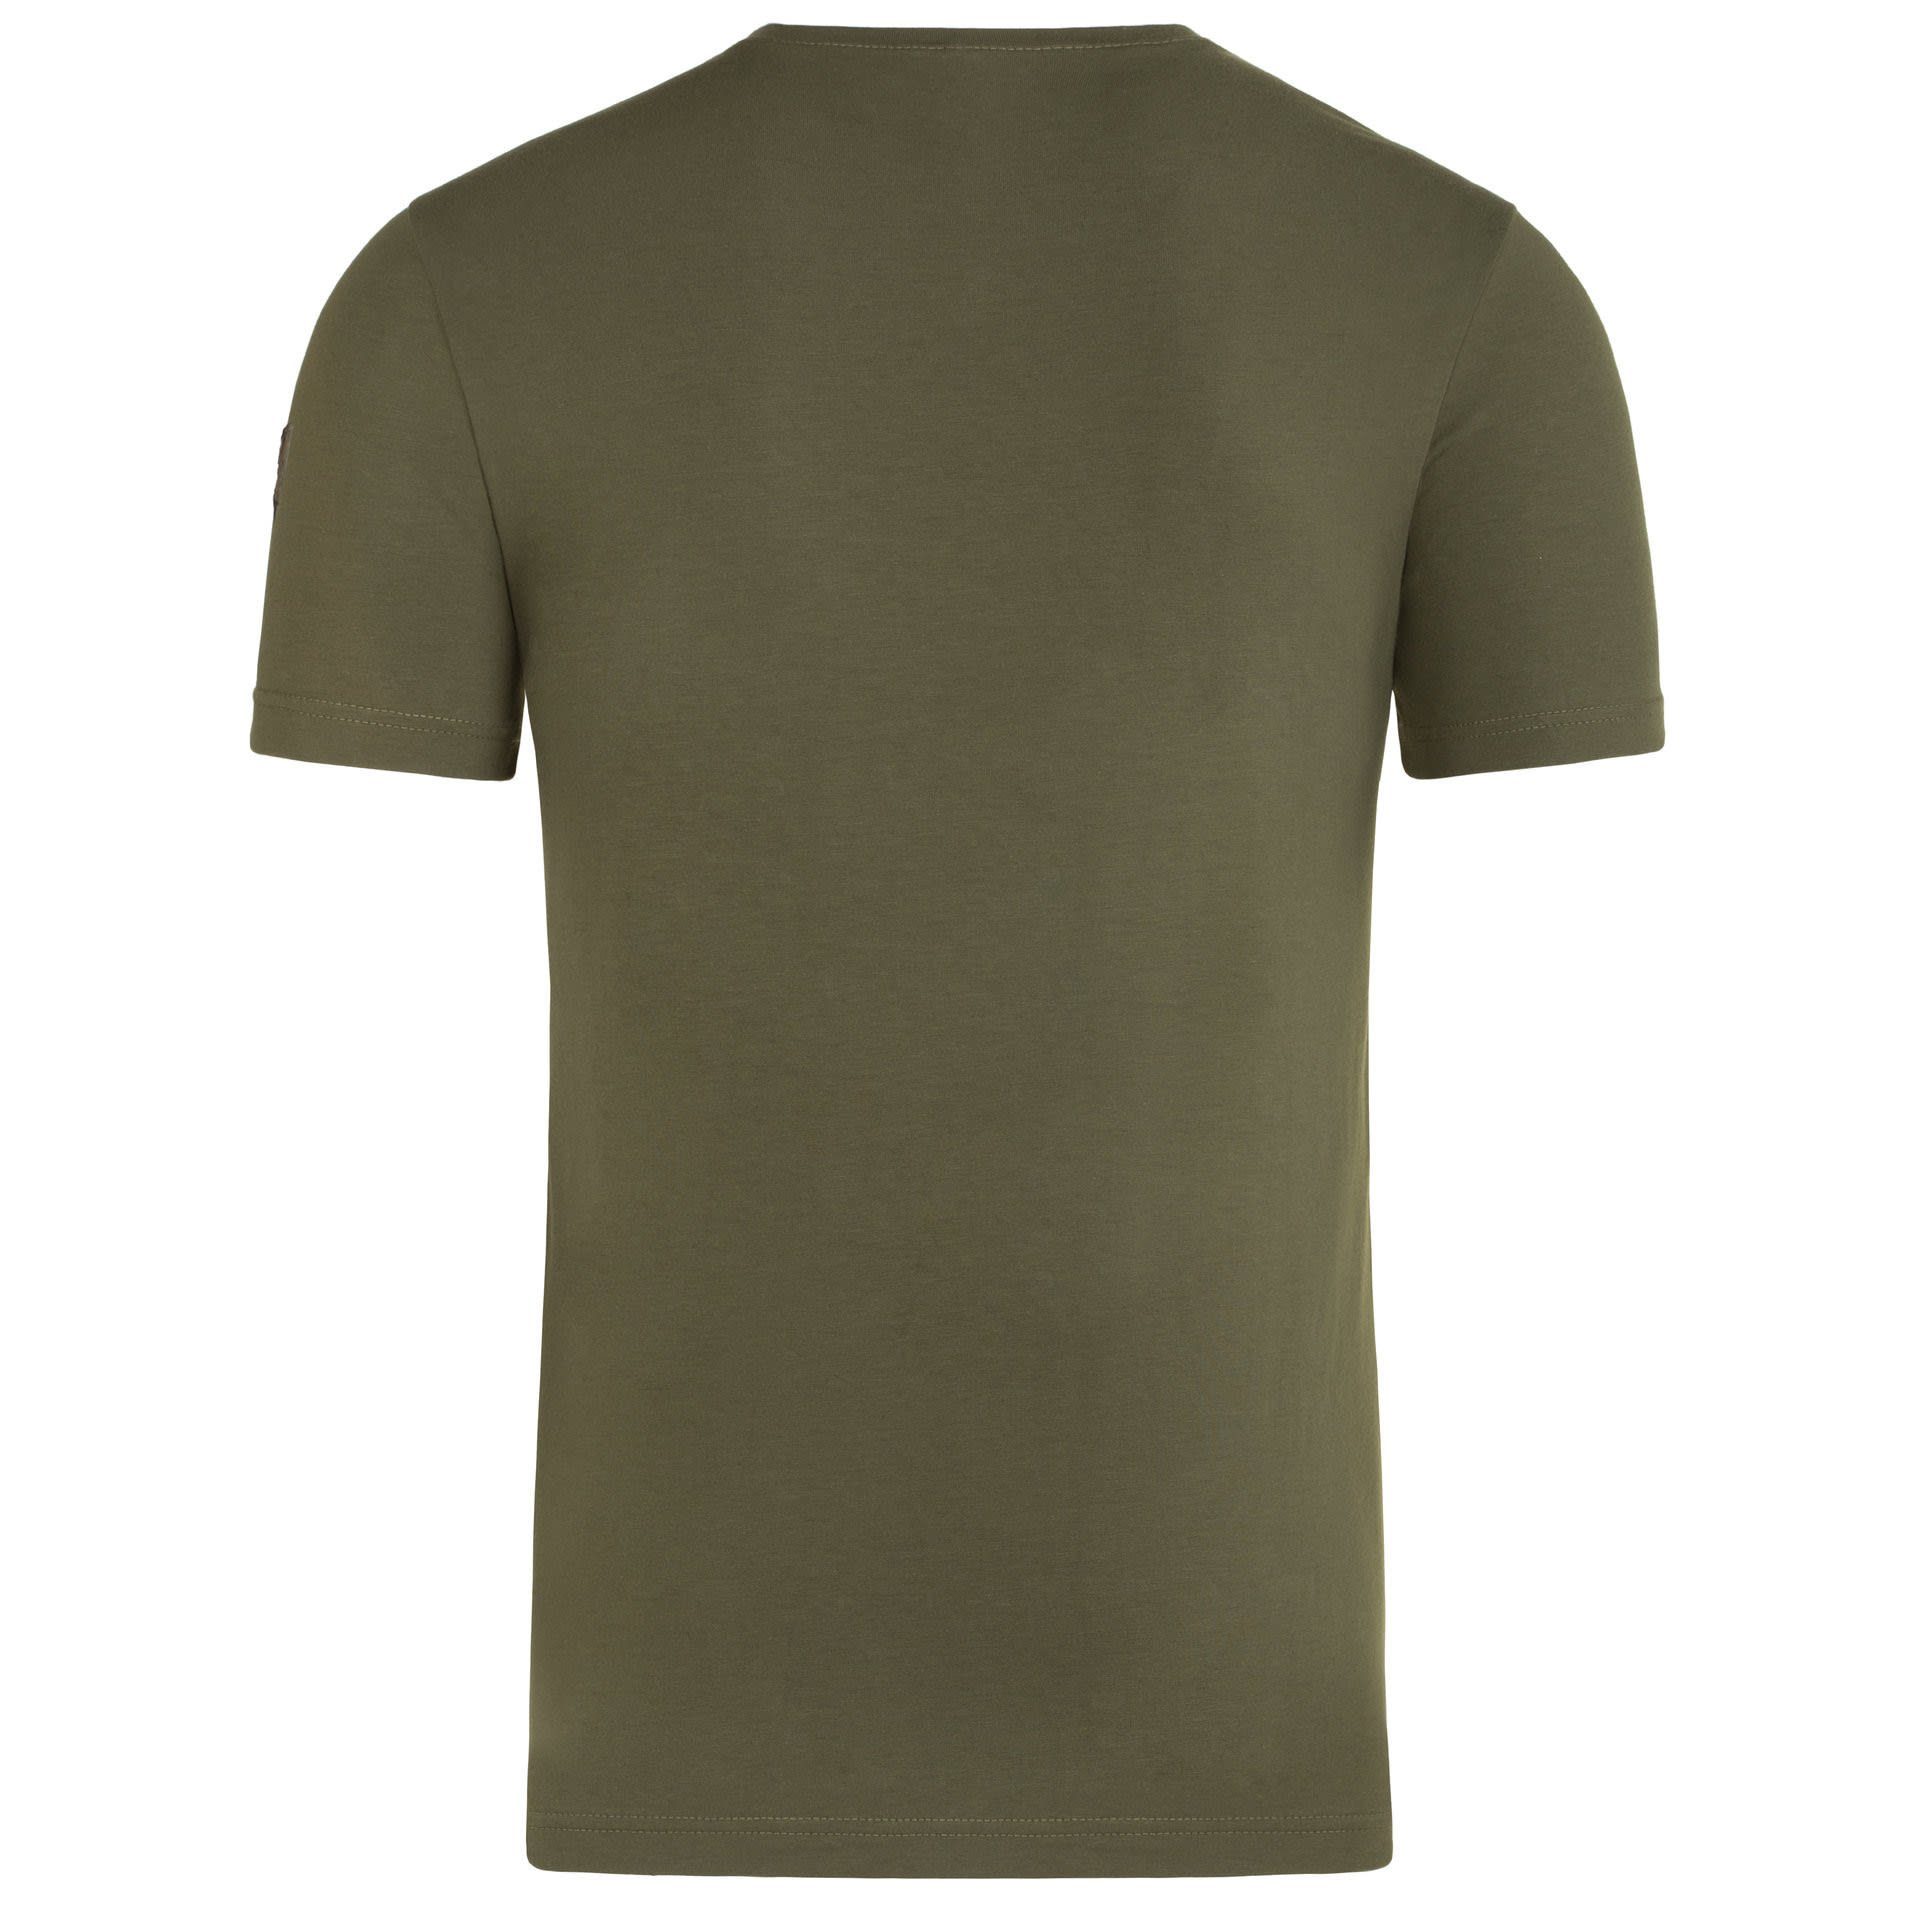 Altkaseralm Herren Green T-Shirt M Kurzarm-Shirt Almgwand Almgwand Green